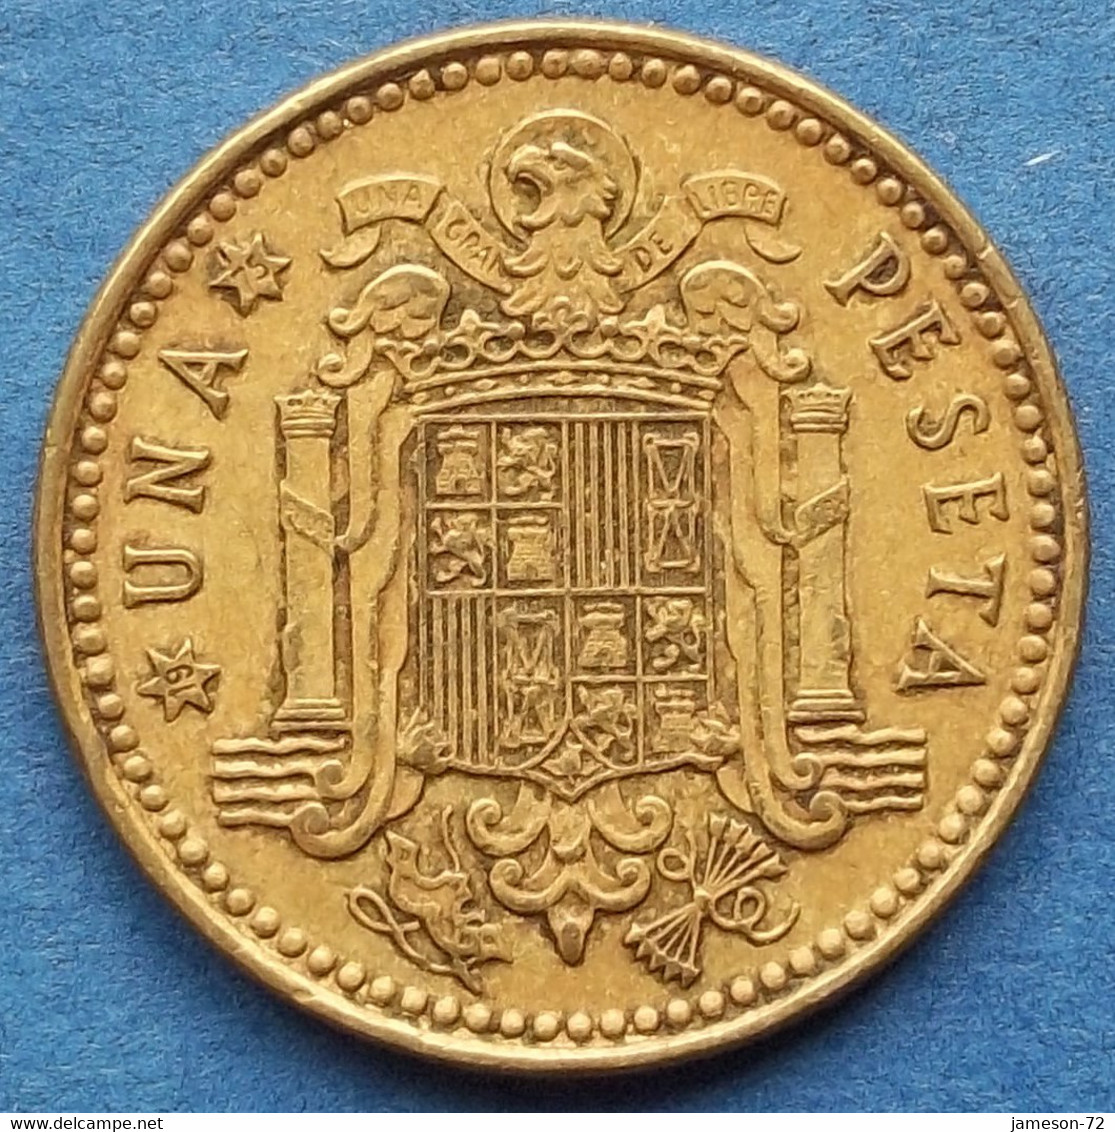 SPAIN - 1 Peseta 1966 *75 KM# 796 Francisco Franco (1936-1975) - Edelweiss Coins - 1 Peseta